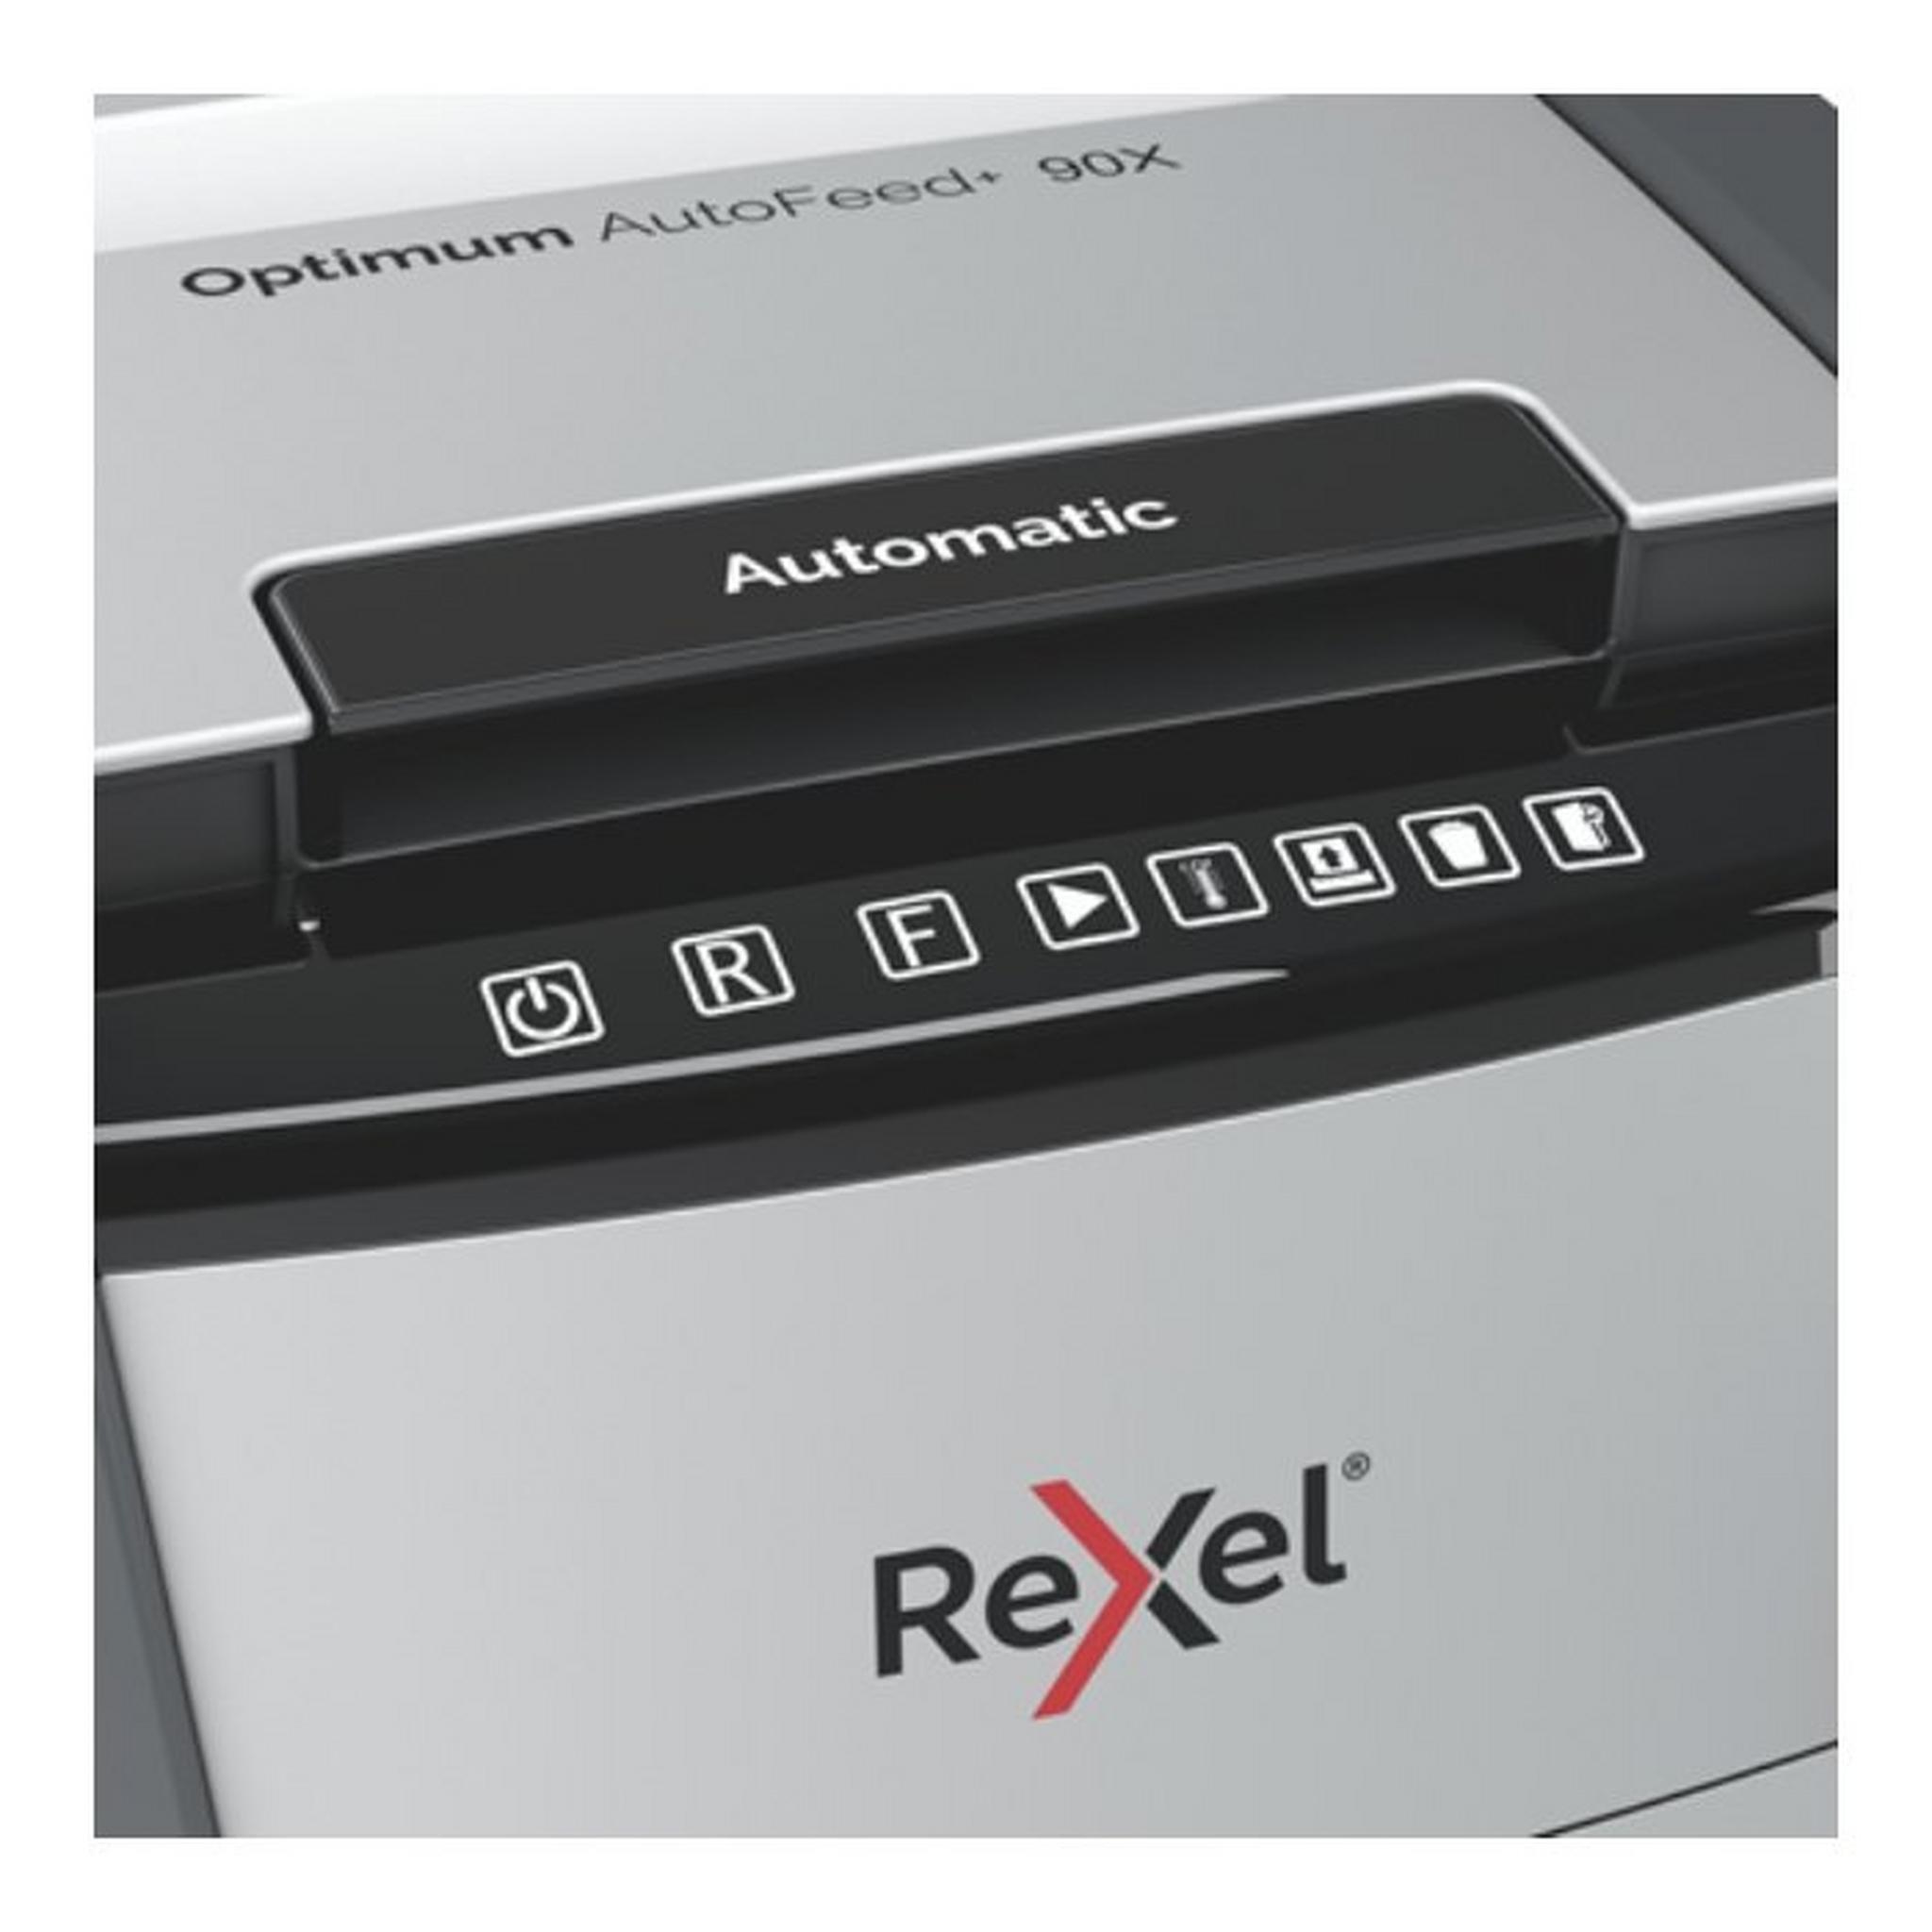 Rexel Optimum AutoFeed+ 90X Automatic Cross Cut Paper Shredder